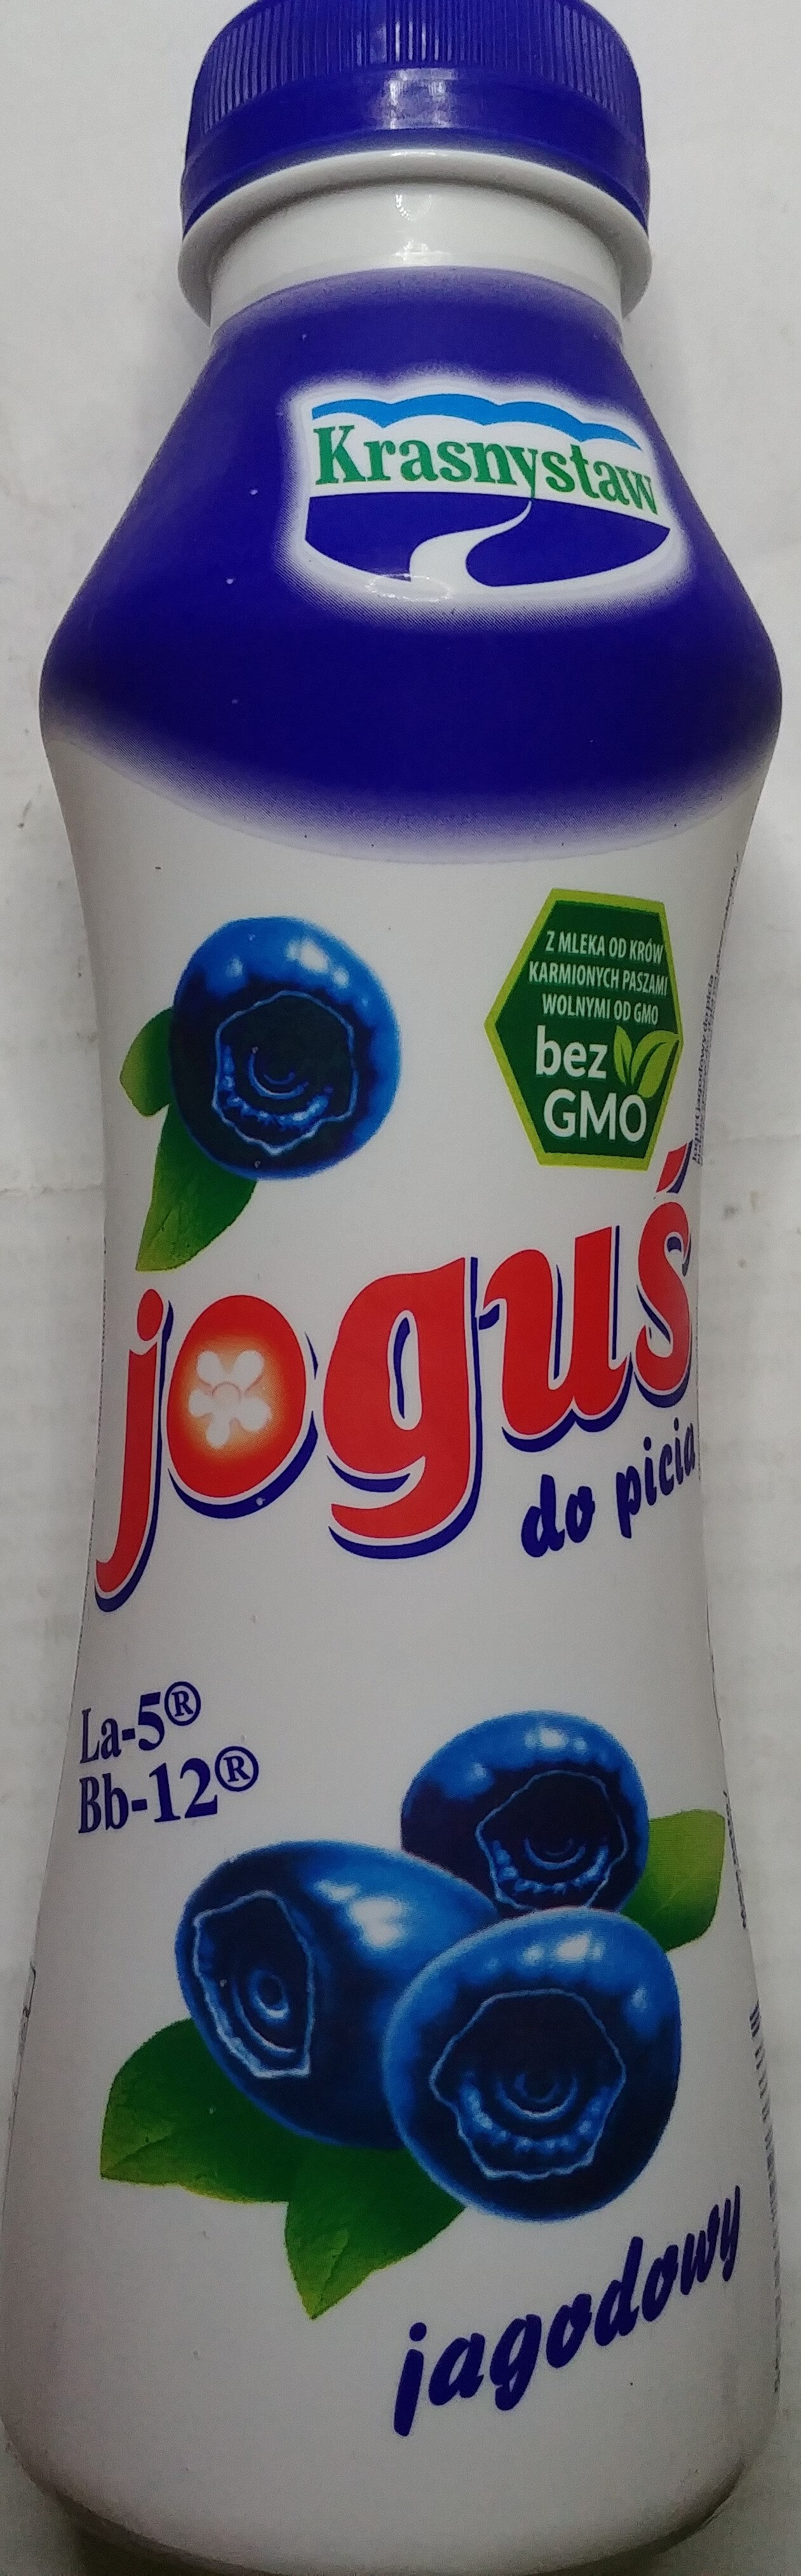 Jogurt jagodowy do picia - Produkt